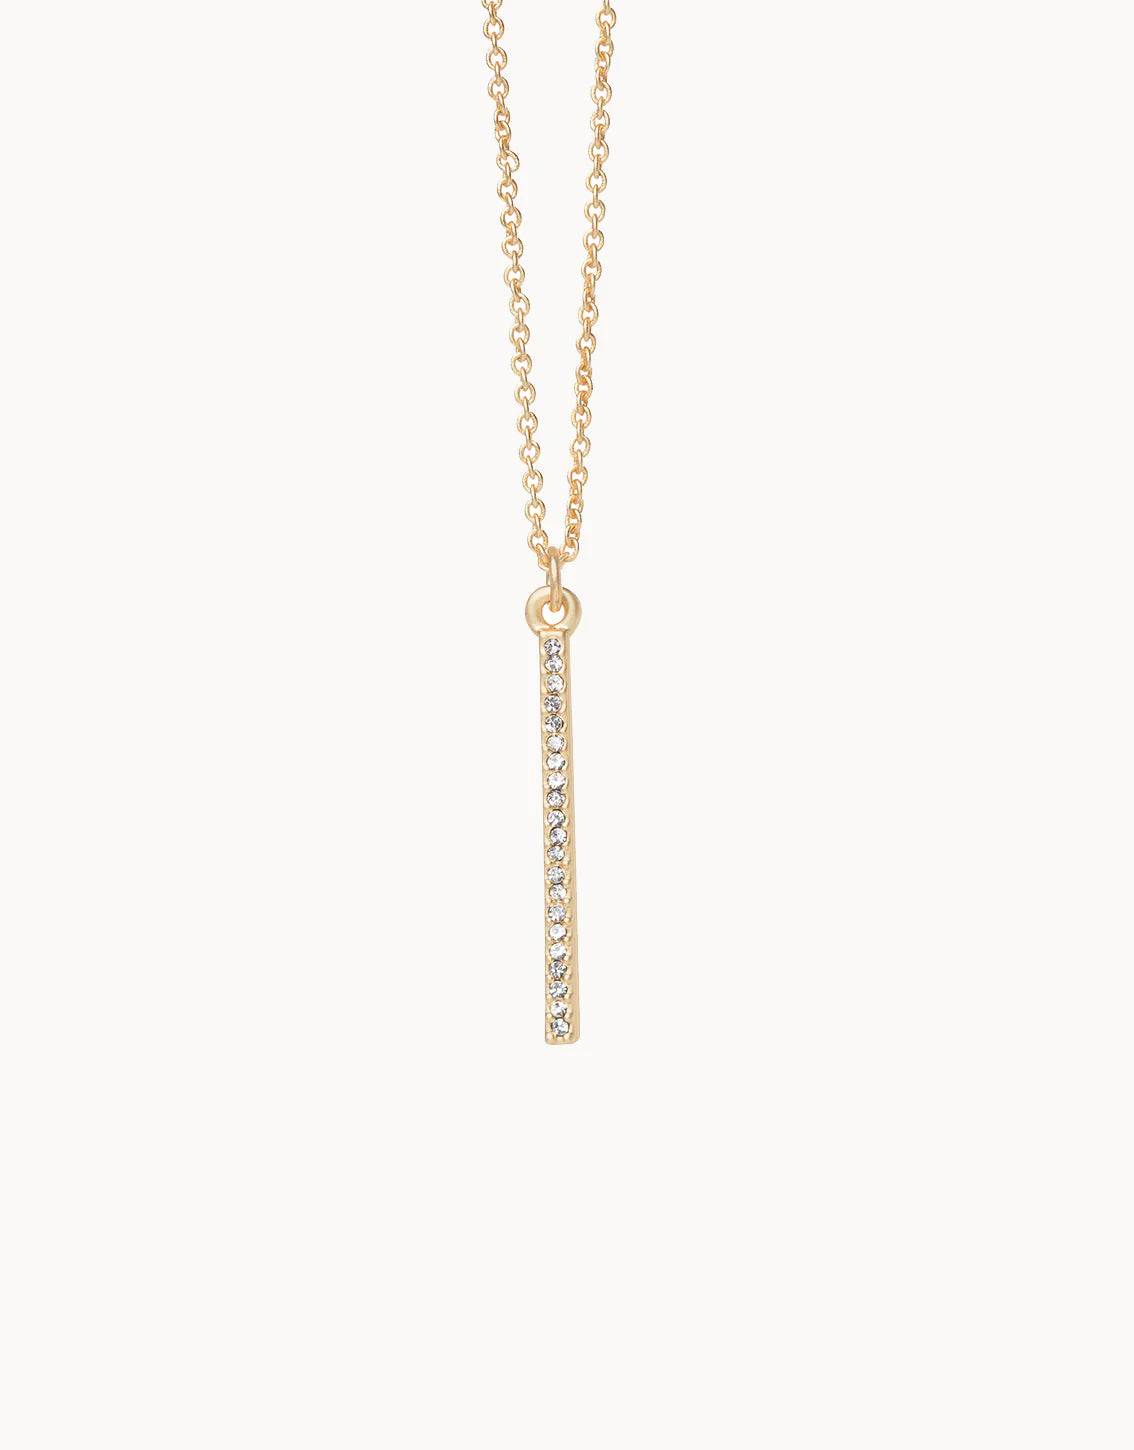 Spartina 449 Se La Vie Unstoppable gold bar necklace 